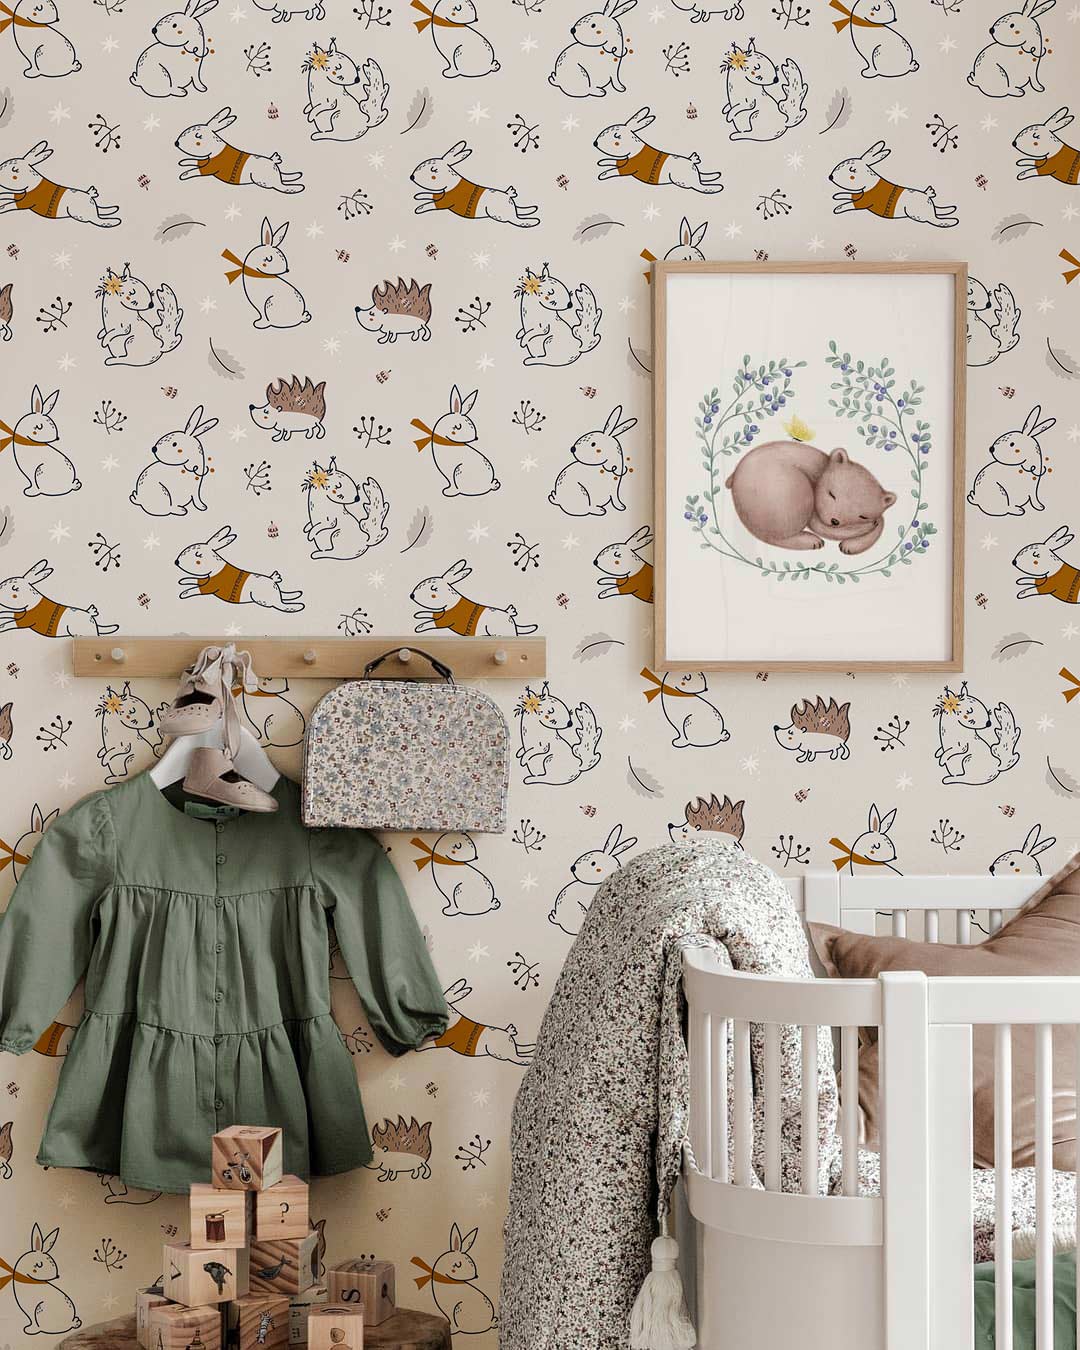 rabbit wallpaper with a handmade animal pattern